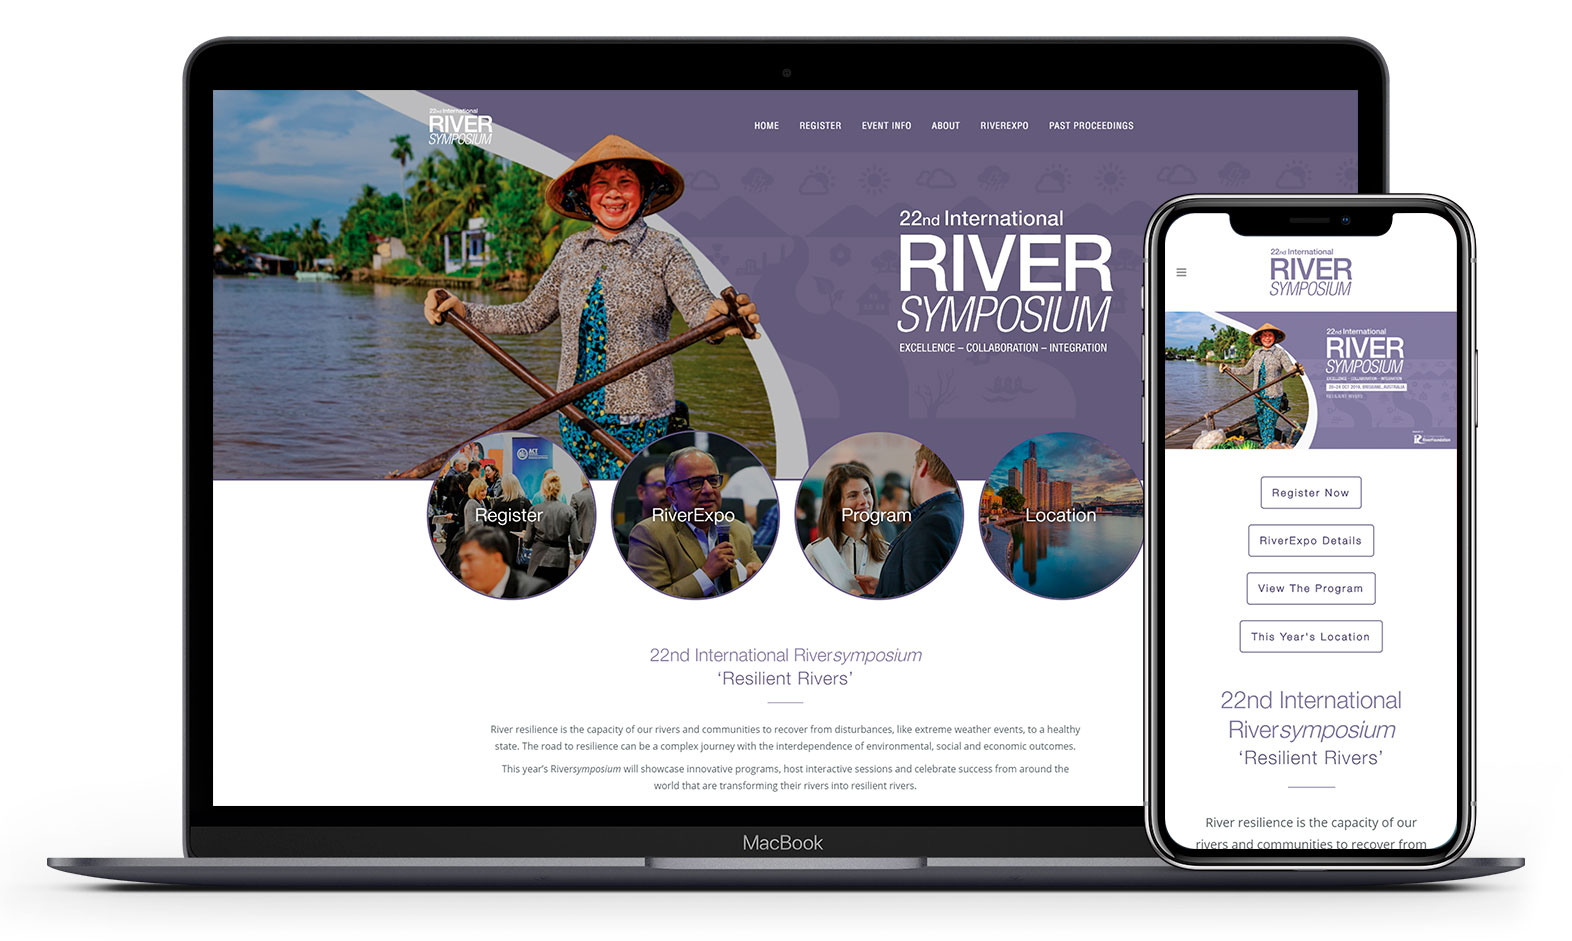 Riversymposium's website design displayed responsive devices